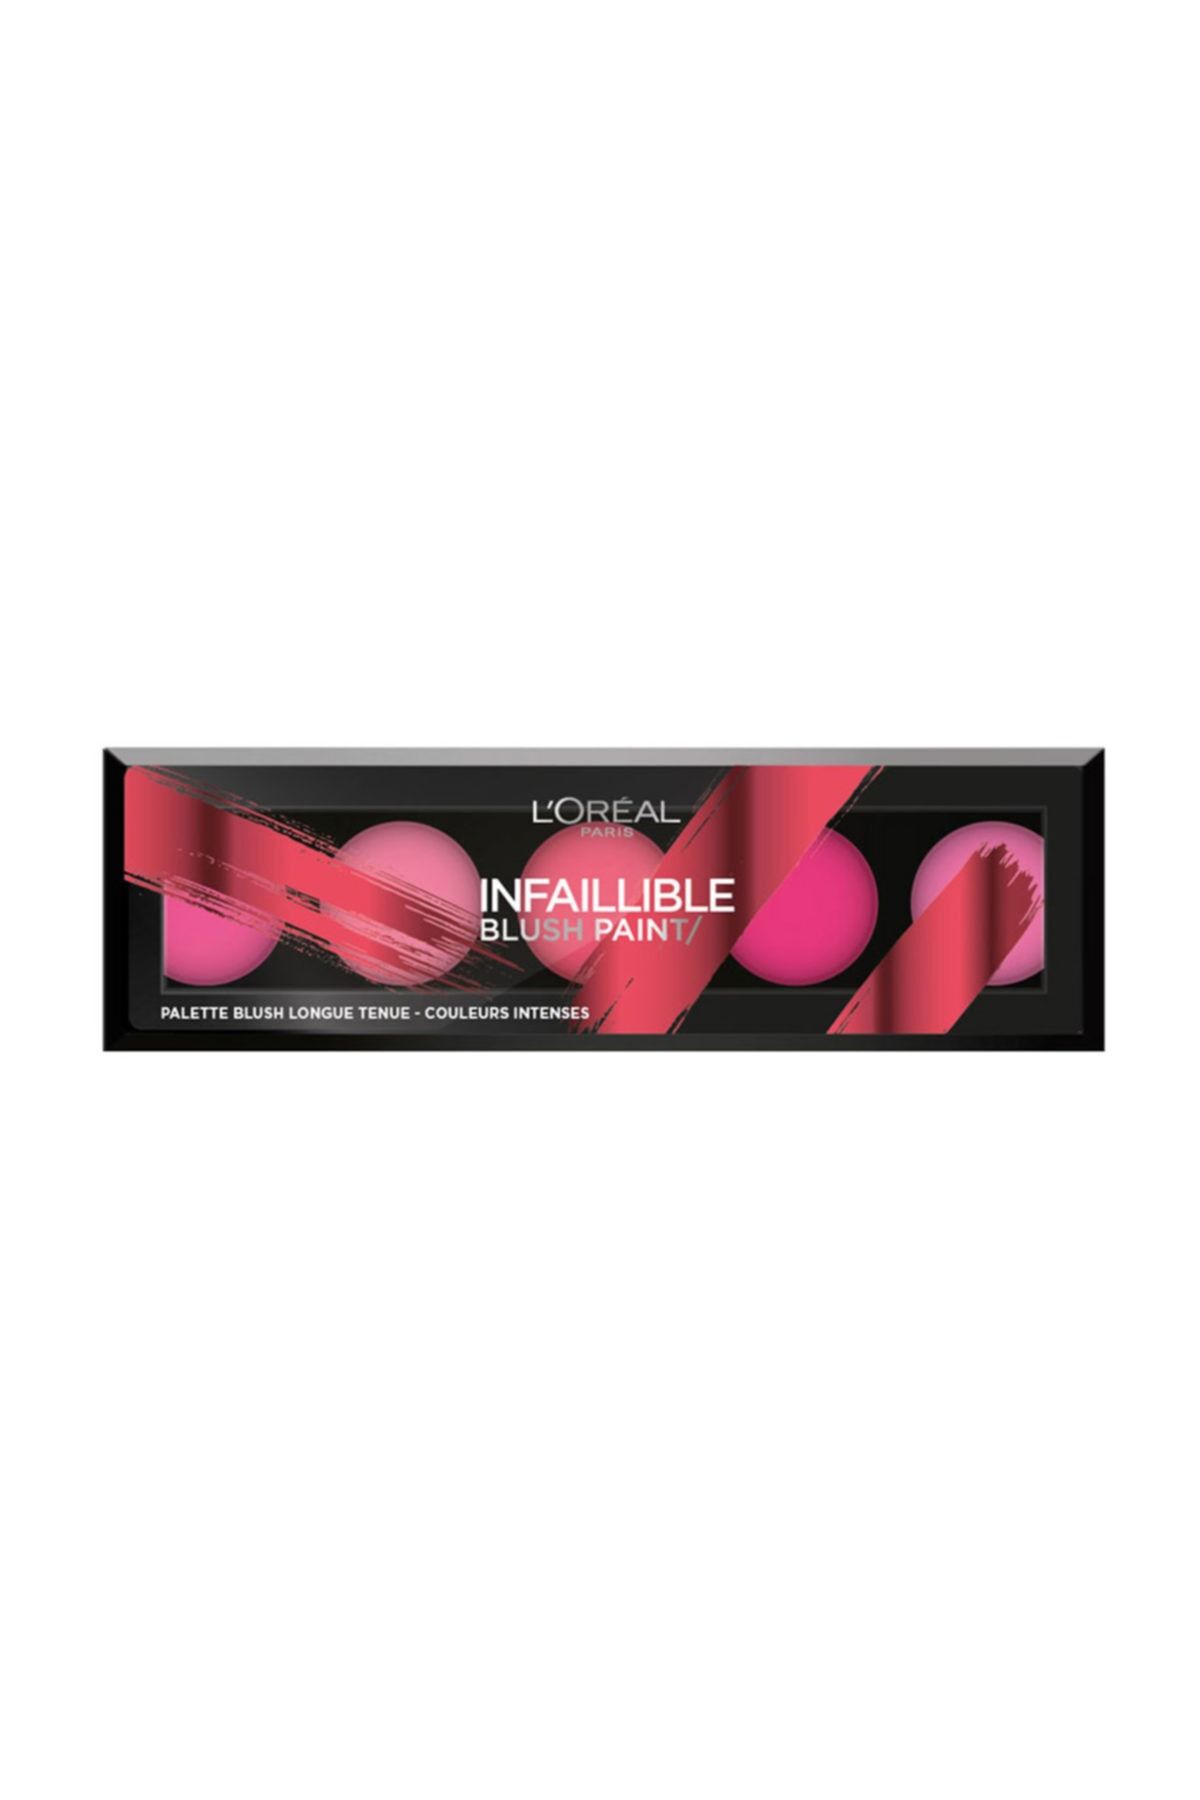 L'Oreal Paris پالت رژگونه چندکاره Infallible Blush Palette شماره 01